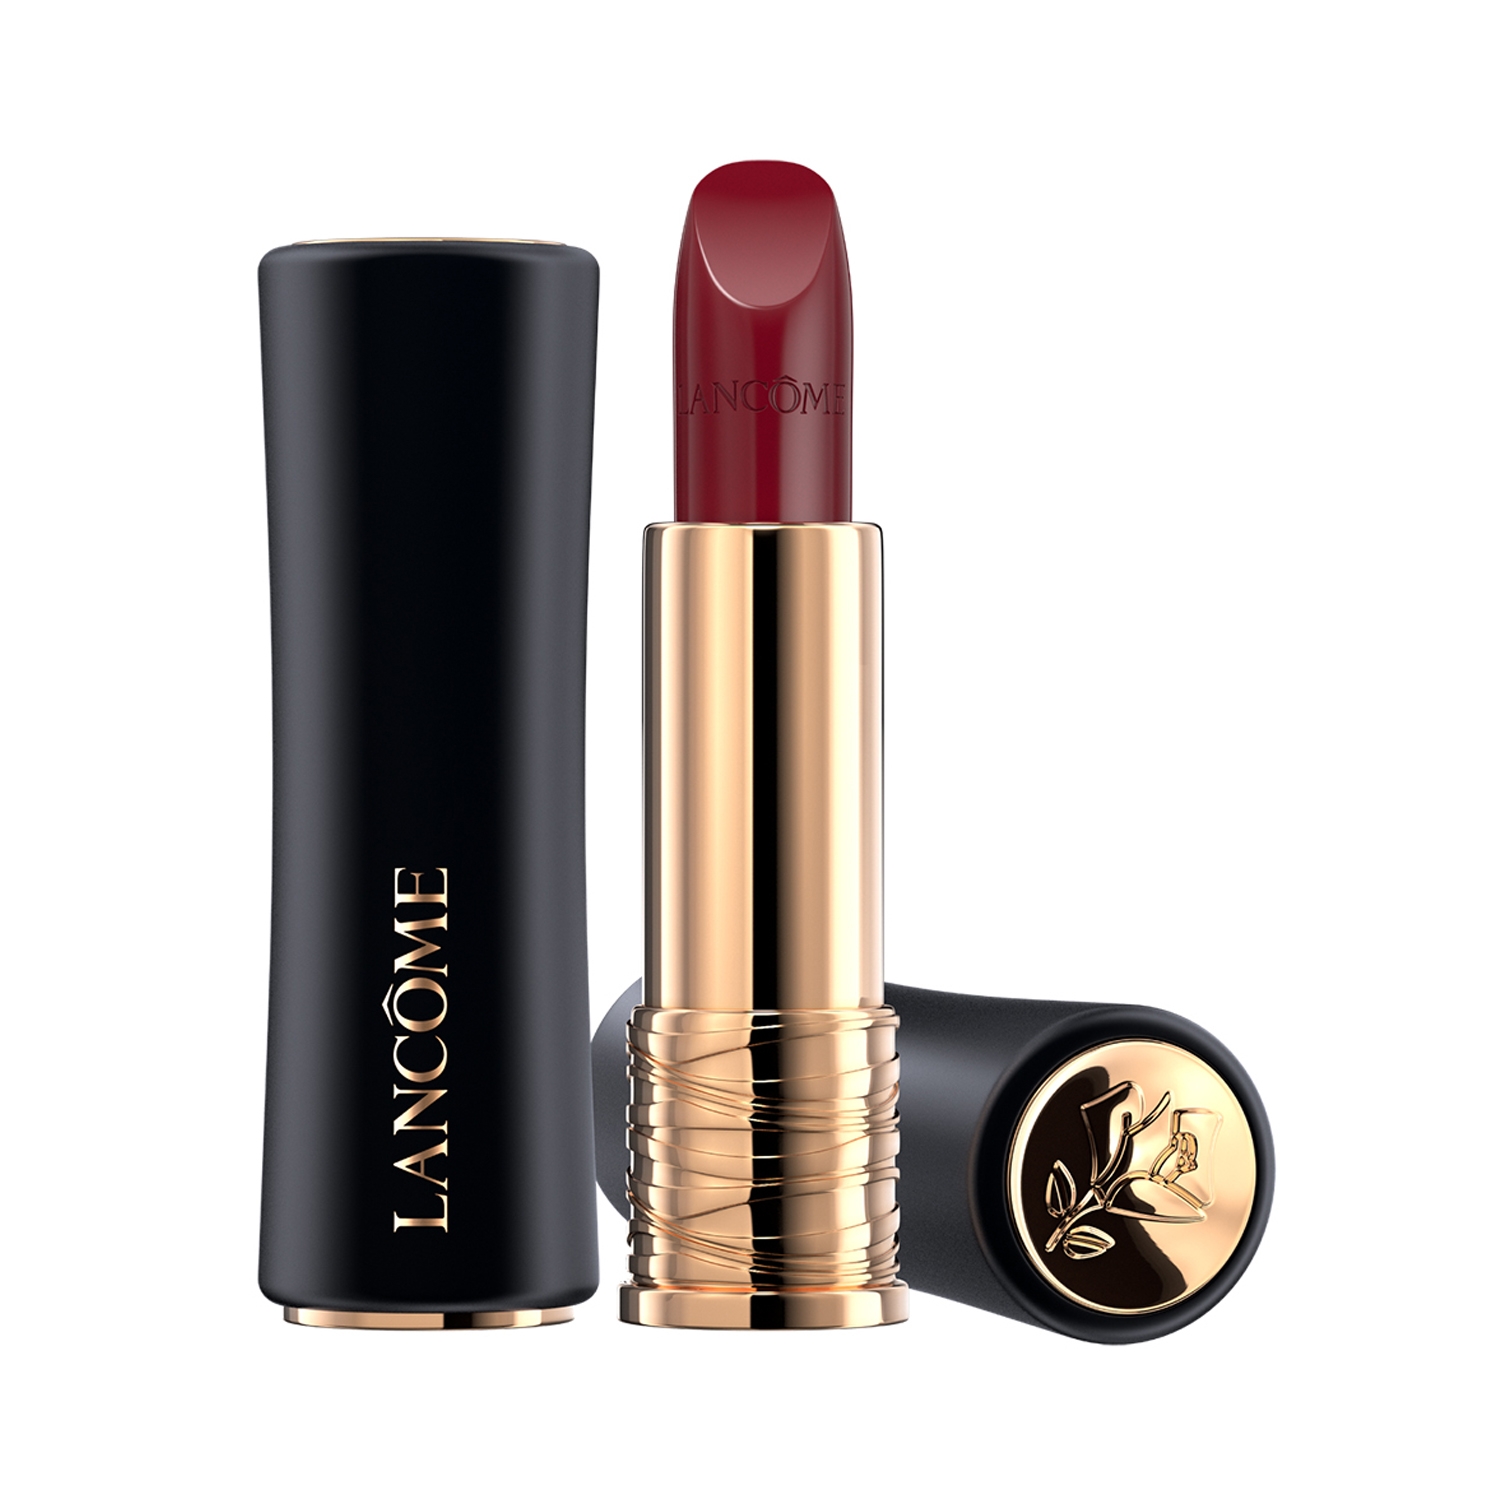 Lancome | Lancome L' Absolu Rouge Cream Lipstick - 397 Berry Noir (3.4g)